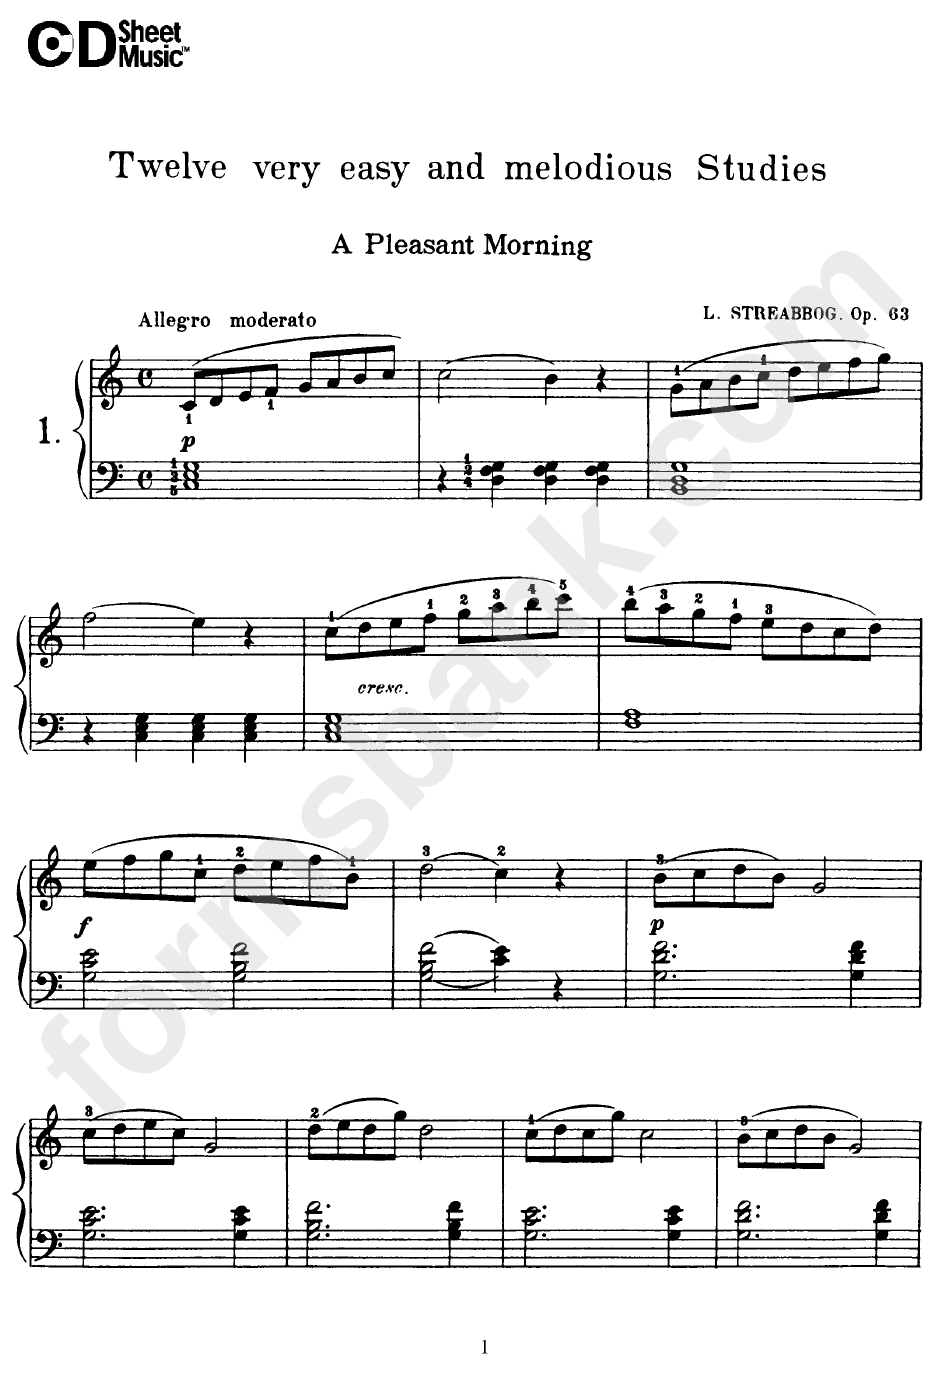 A Pleasant Morning Music Sheet